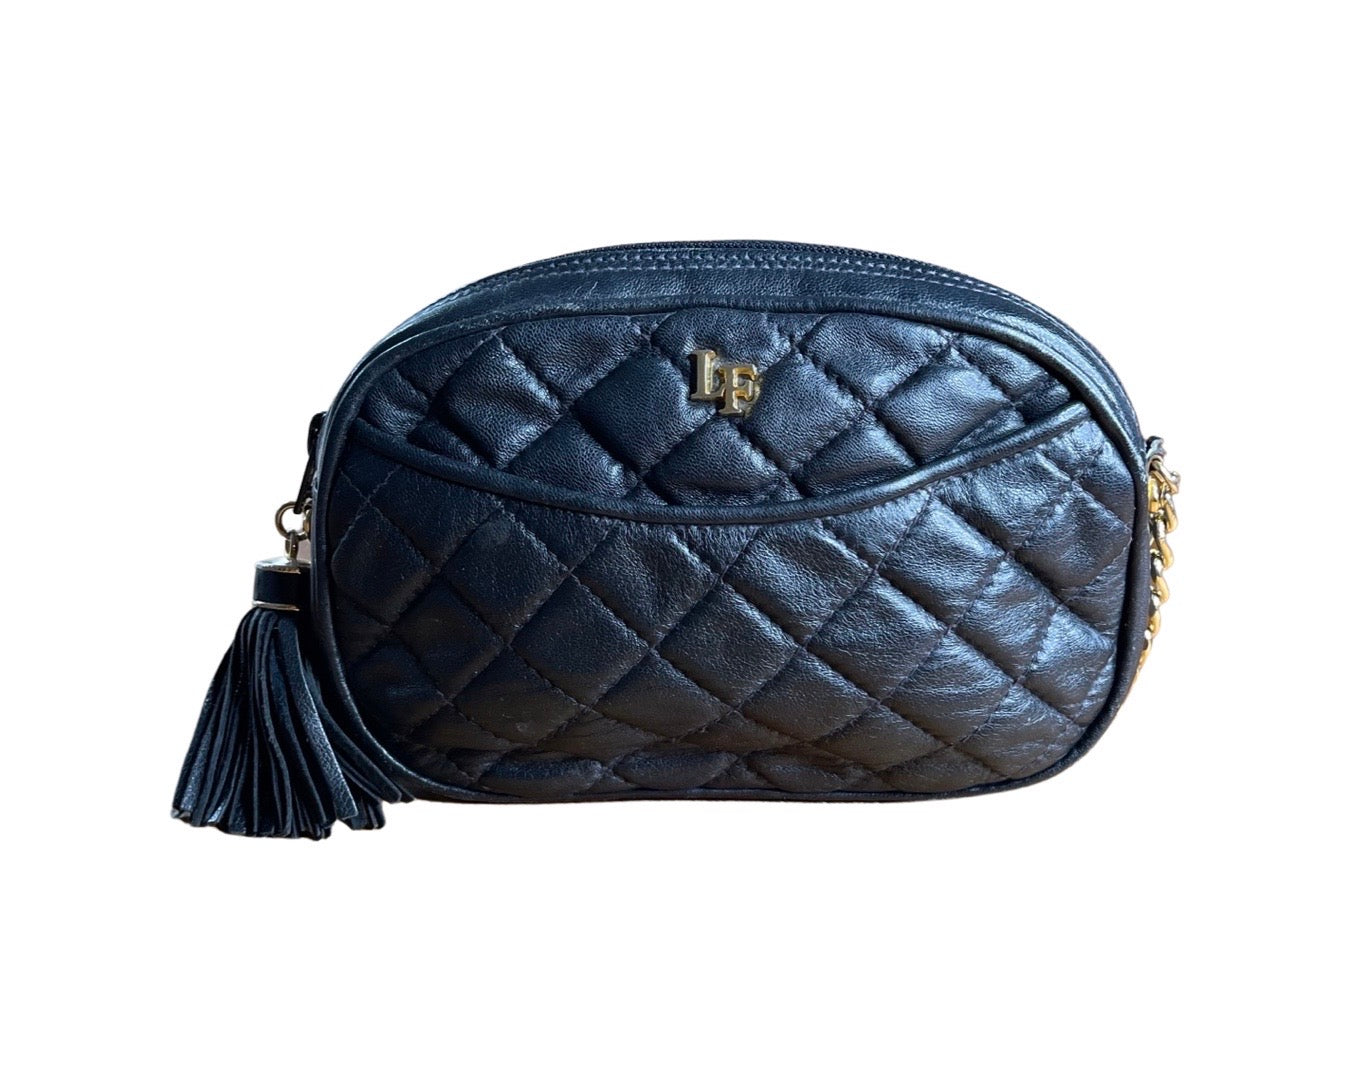 Leather handbag Louis Feraud Brown in Leather - 18735539